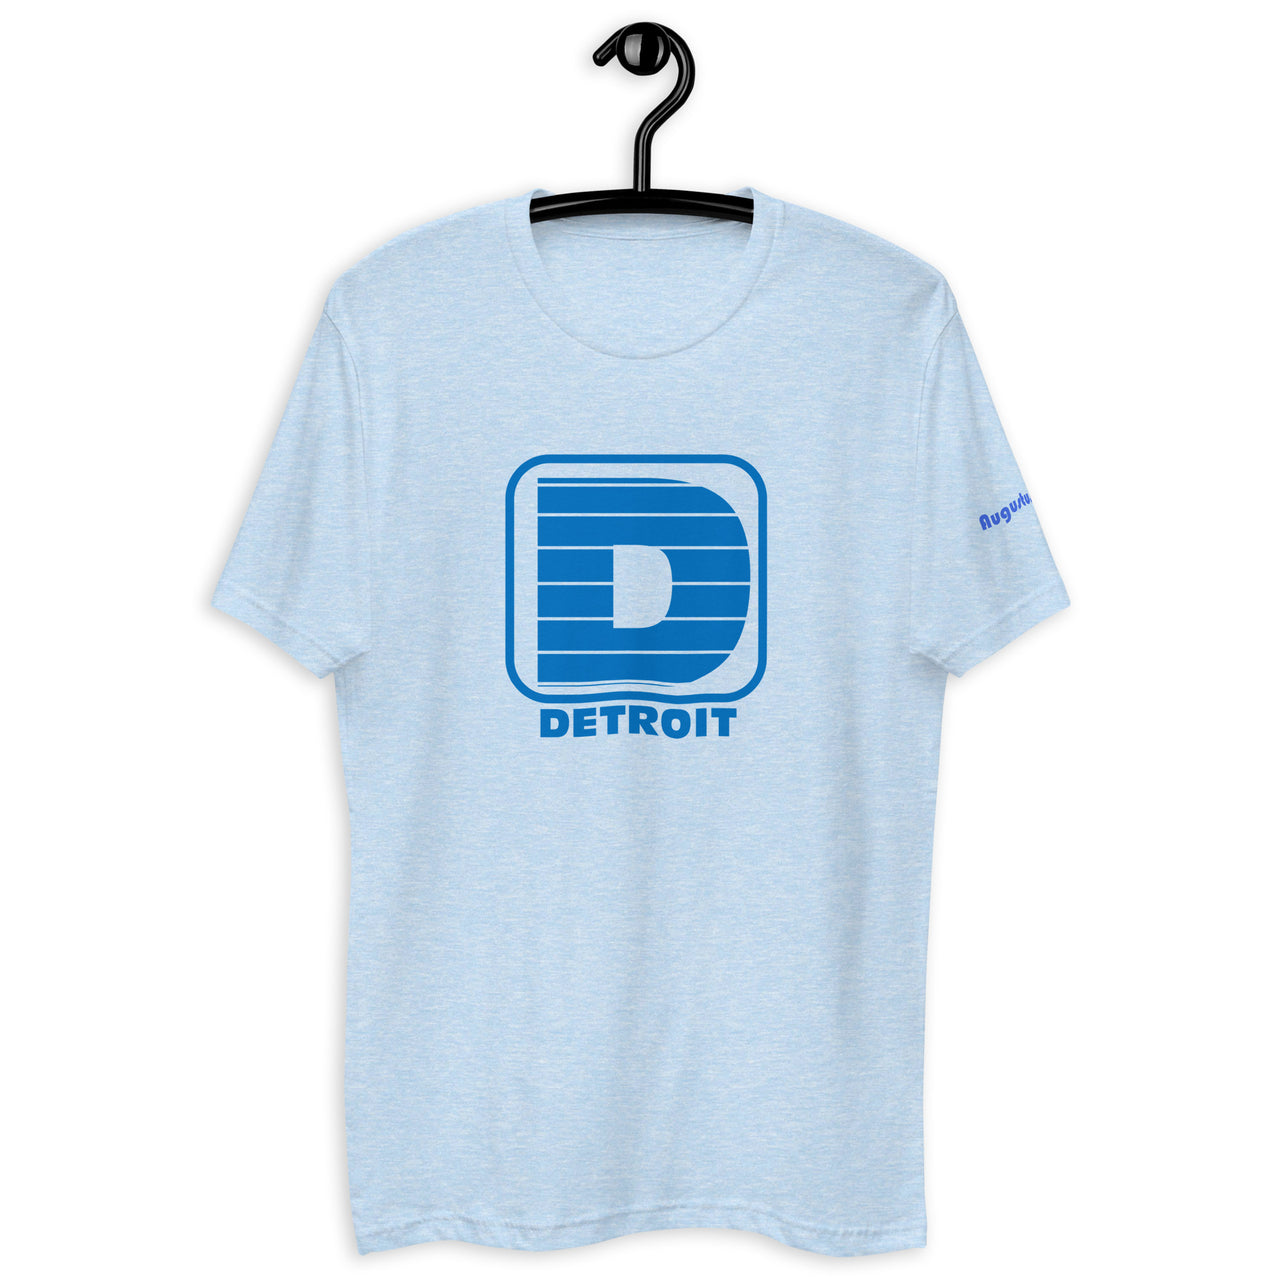 Detroit - Short Sleeve T-shirt